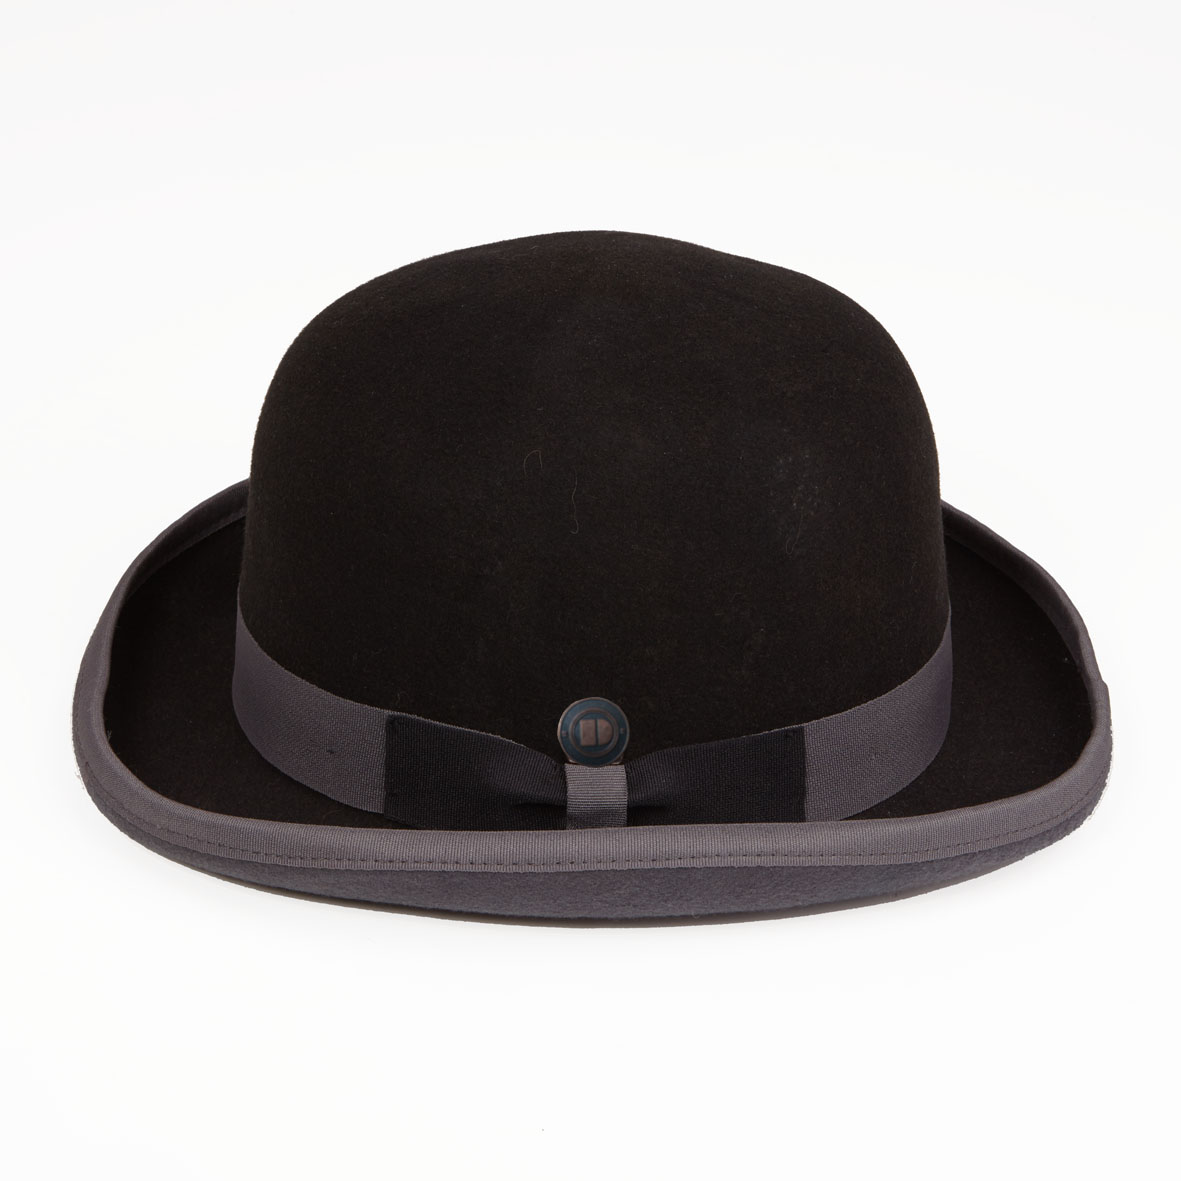 Winter Hats – Buy Them Online from Dasmarca.com